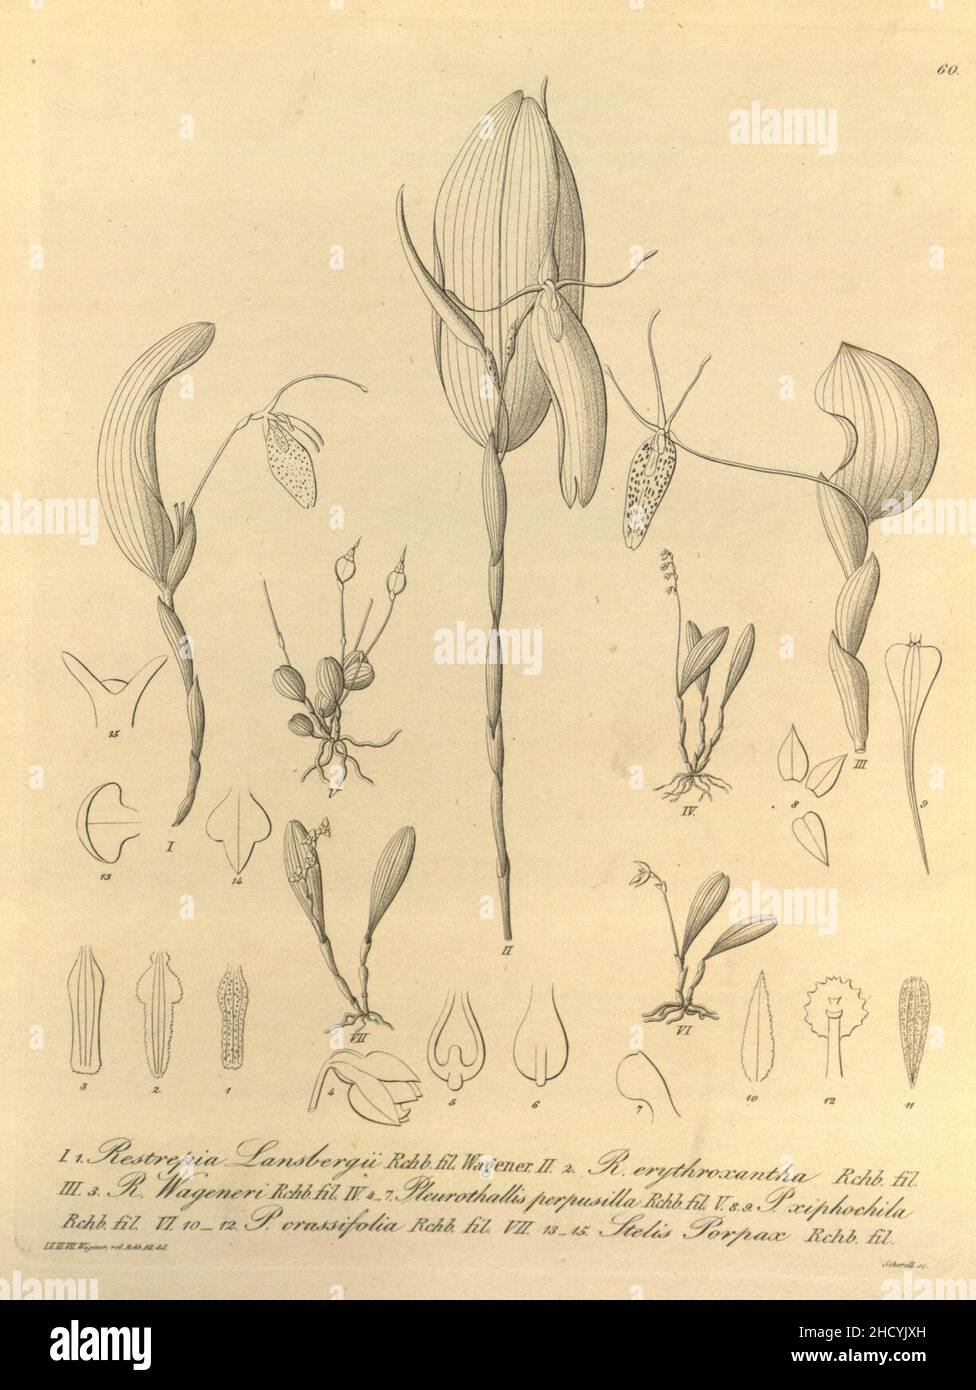 Restrepia lansbergii-R. elegans-R. wageneri-Platystele perpusilla-Trichosalpinx xiphochila-Anathallis minutalis-Stelis porpax - Xenia 1-60 (1858). Stock Photo